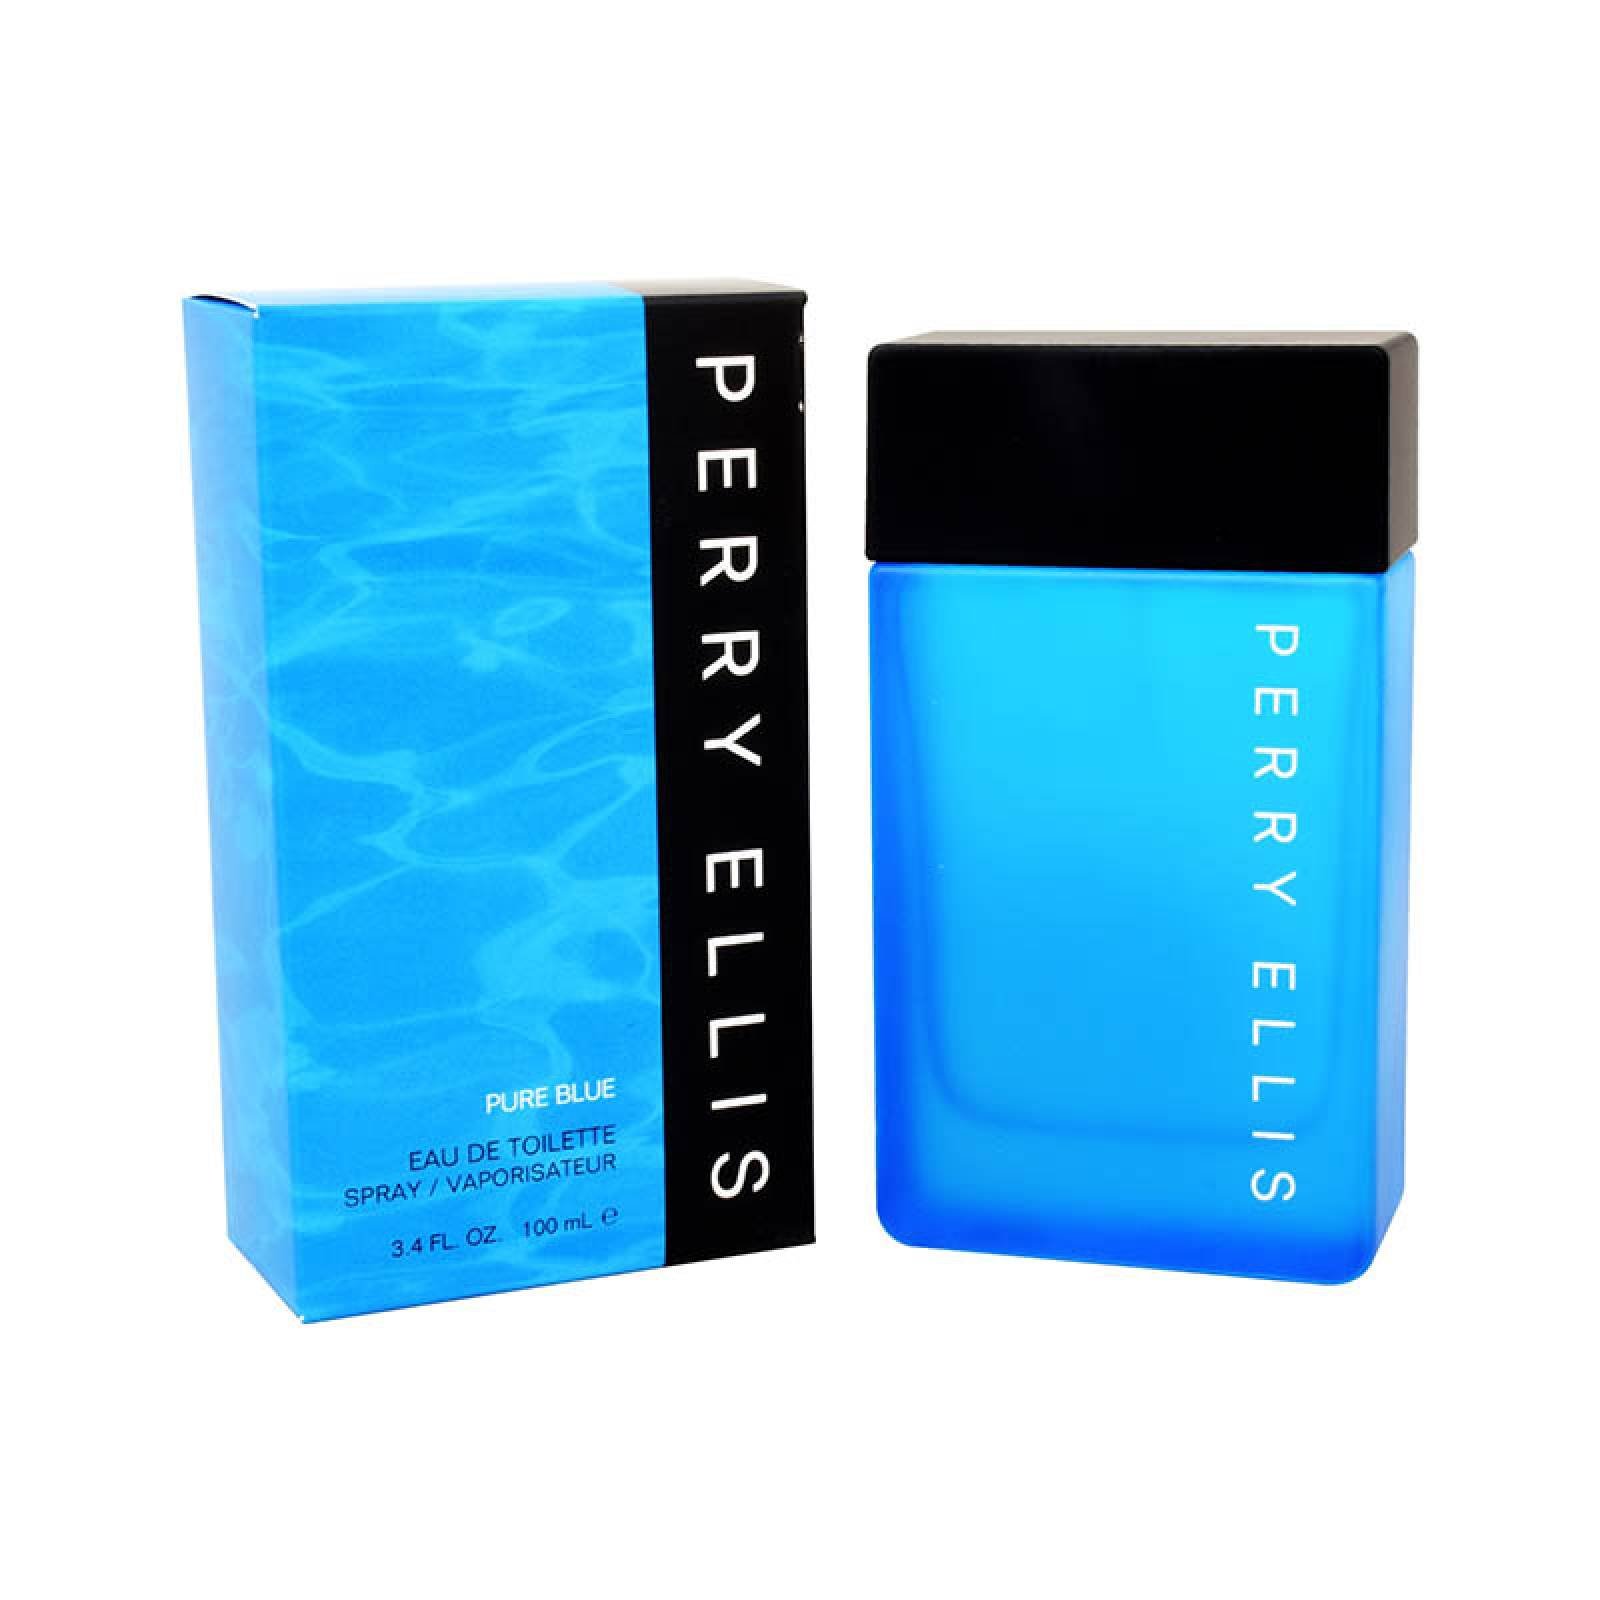 Perry Ellis Pure Blue 100 ml Edt Spray de Perry Ellis